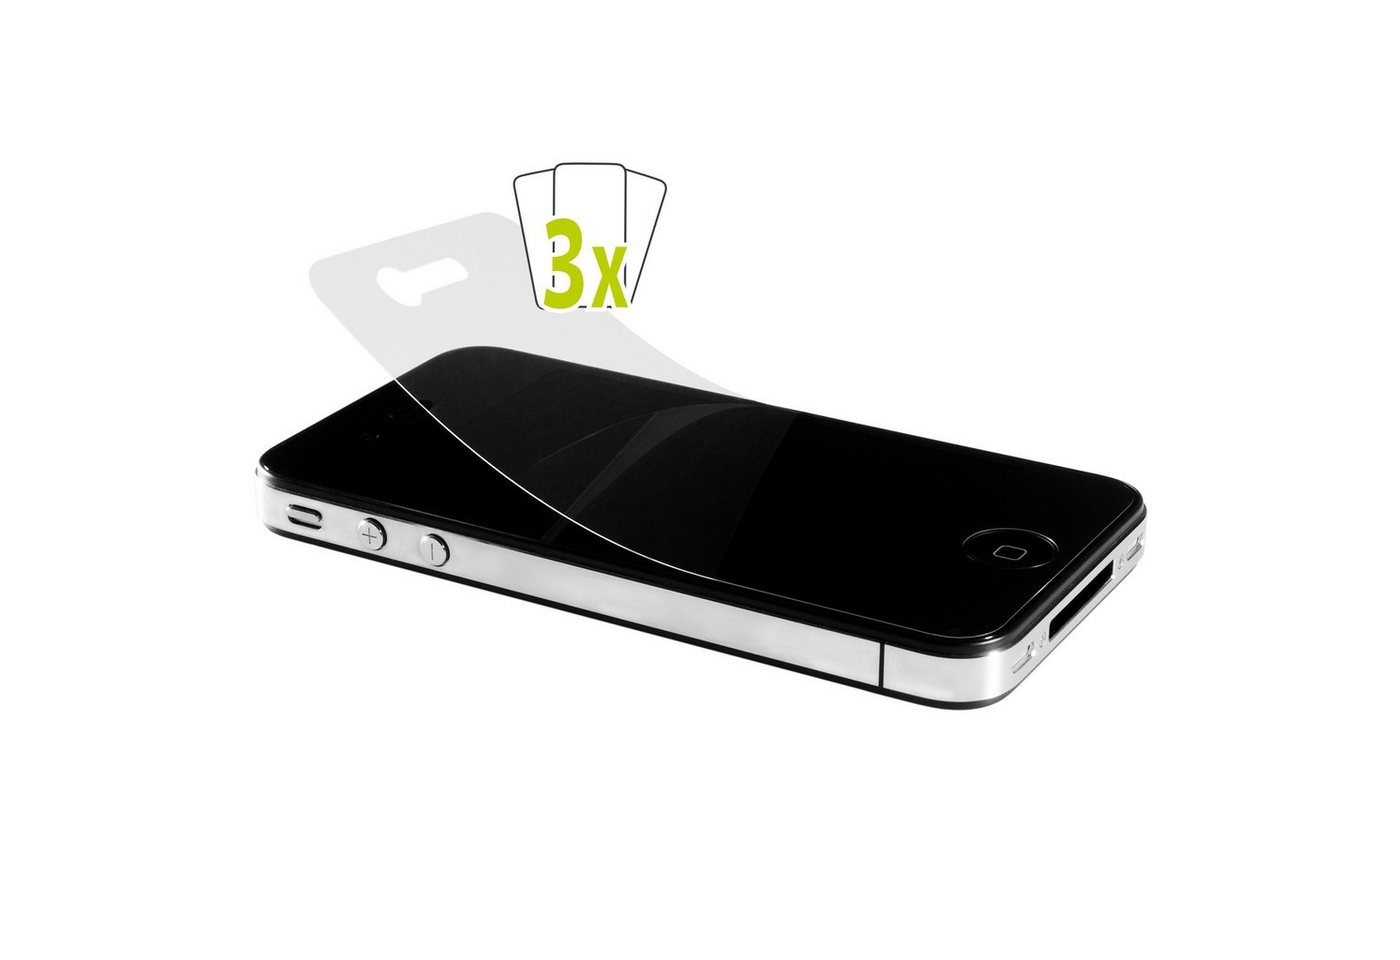 Artwizz Schutzfolie ScratchStopper for iPhone 4/4S, iPhone 4S, iPhone 4 von Artwizz